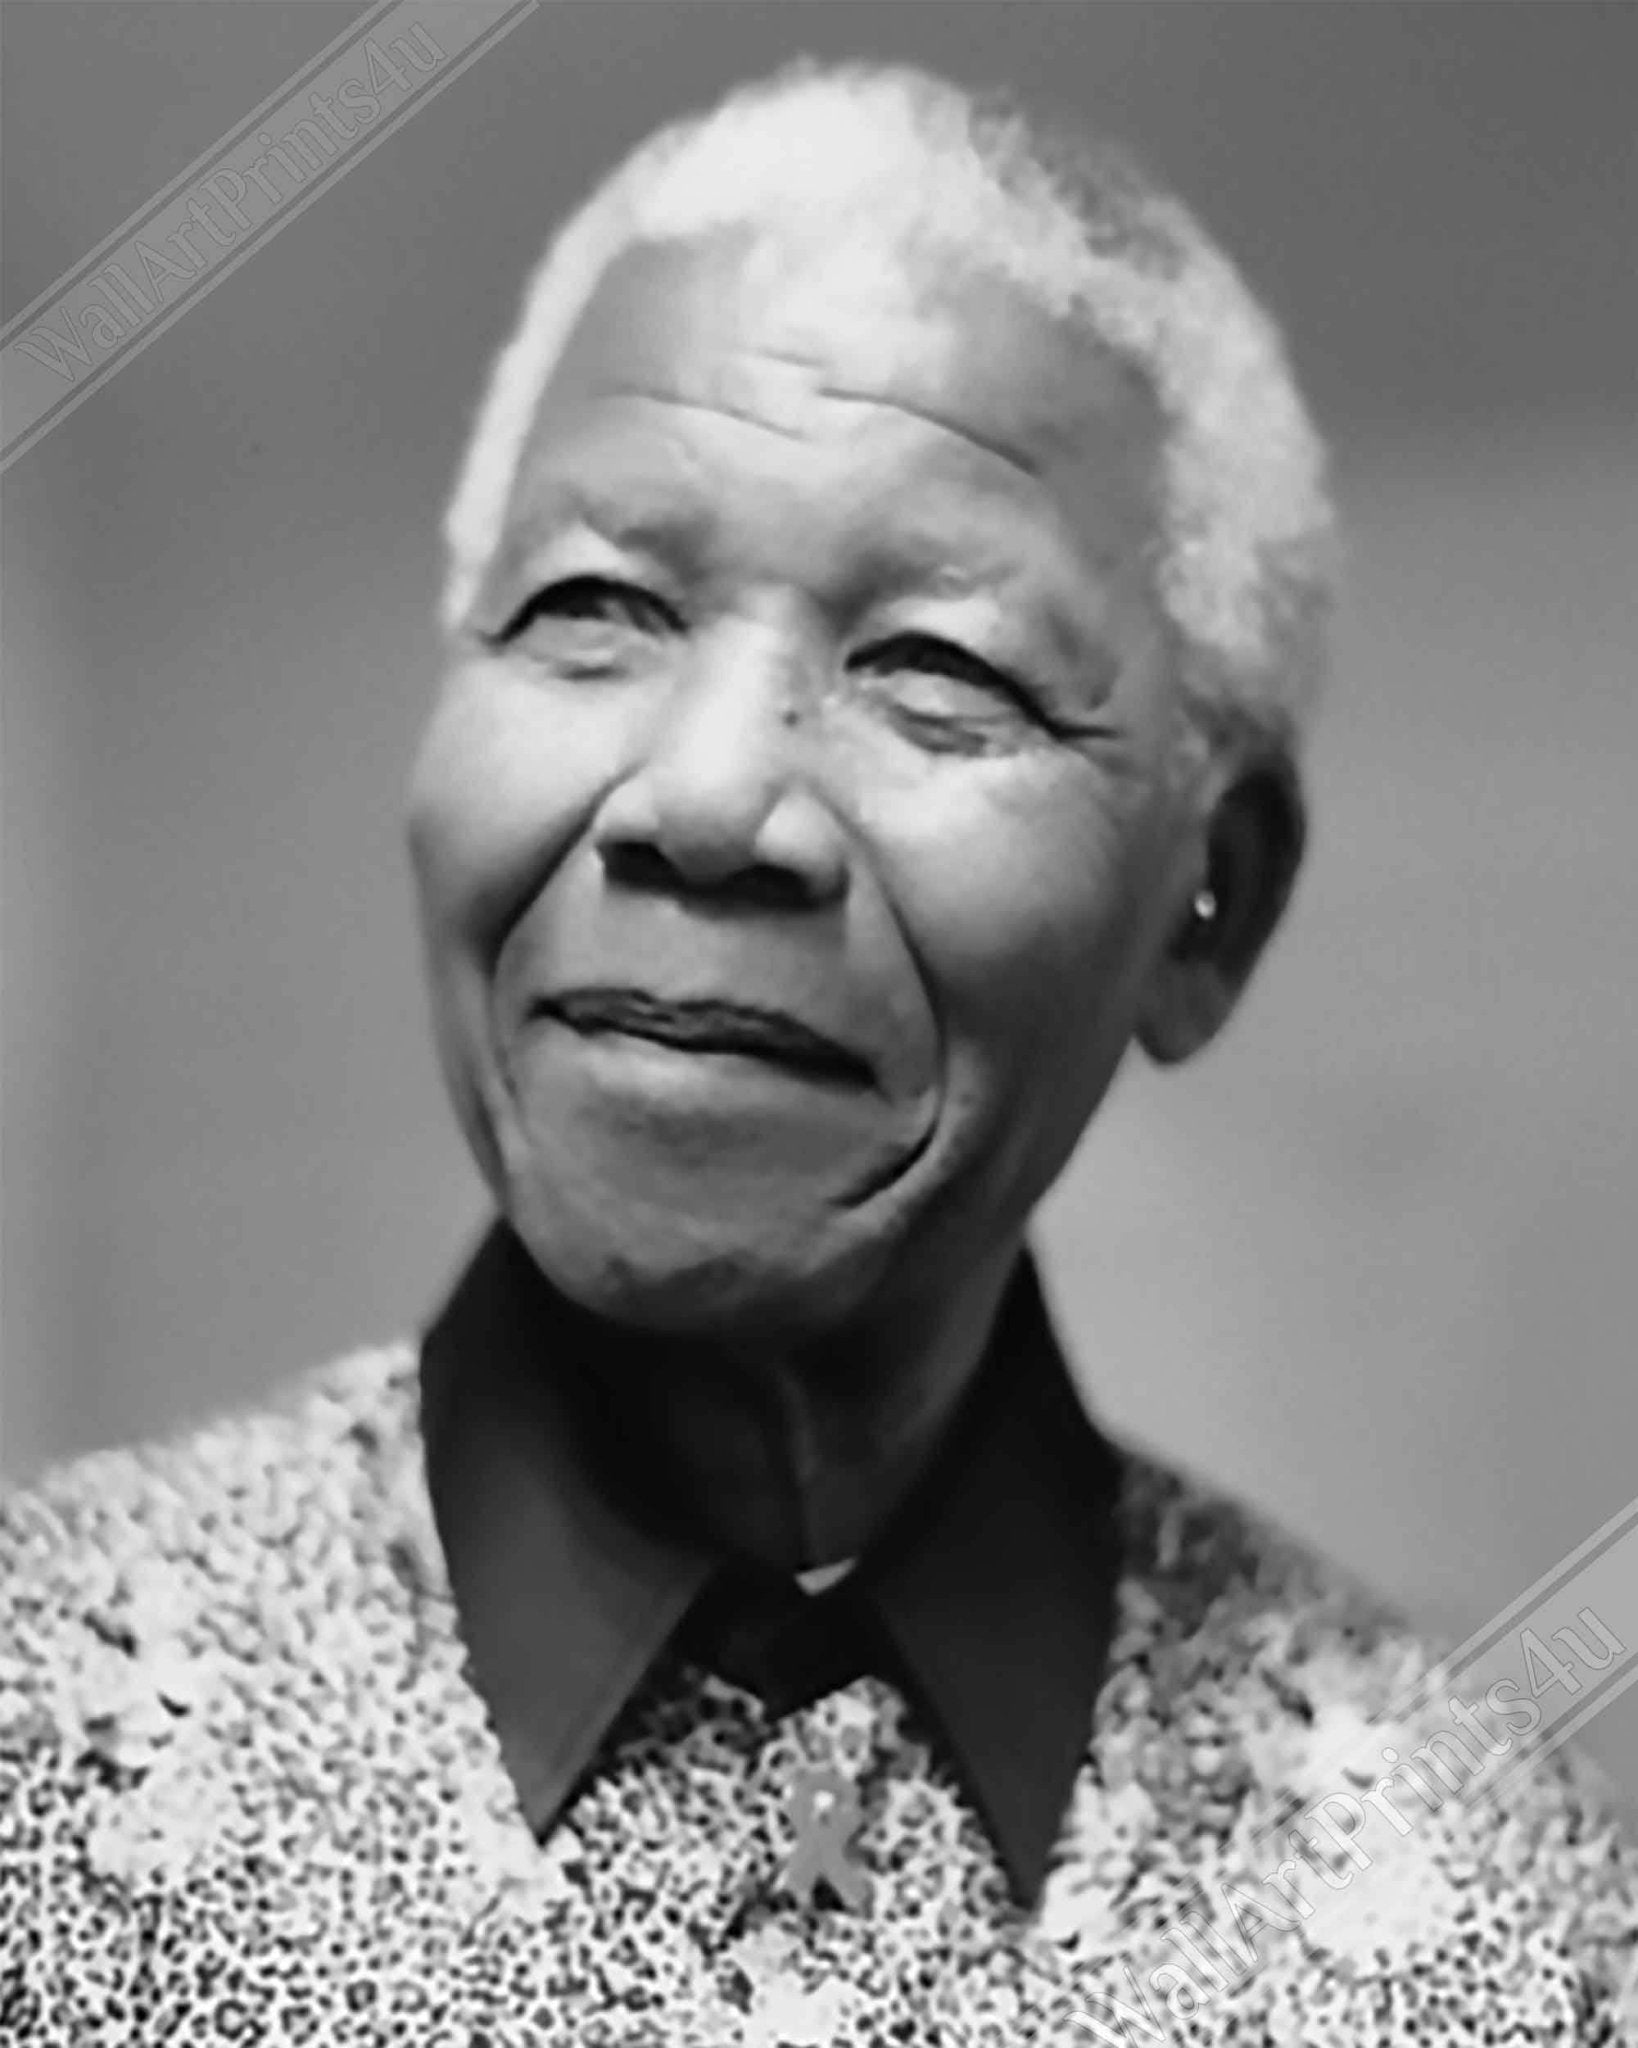 Nelson Mandela Poster, Lifelong Apatheid Opponent, Vintage Photo - Iconic Nelson Mandela Print - Anc Leader - WallArtPrints4U